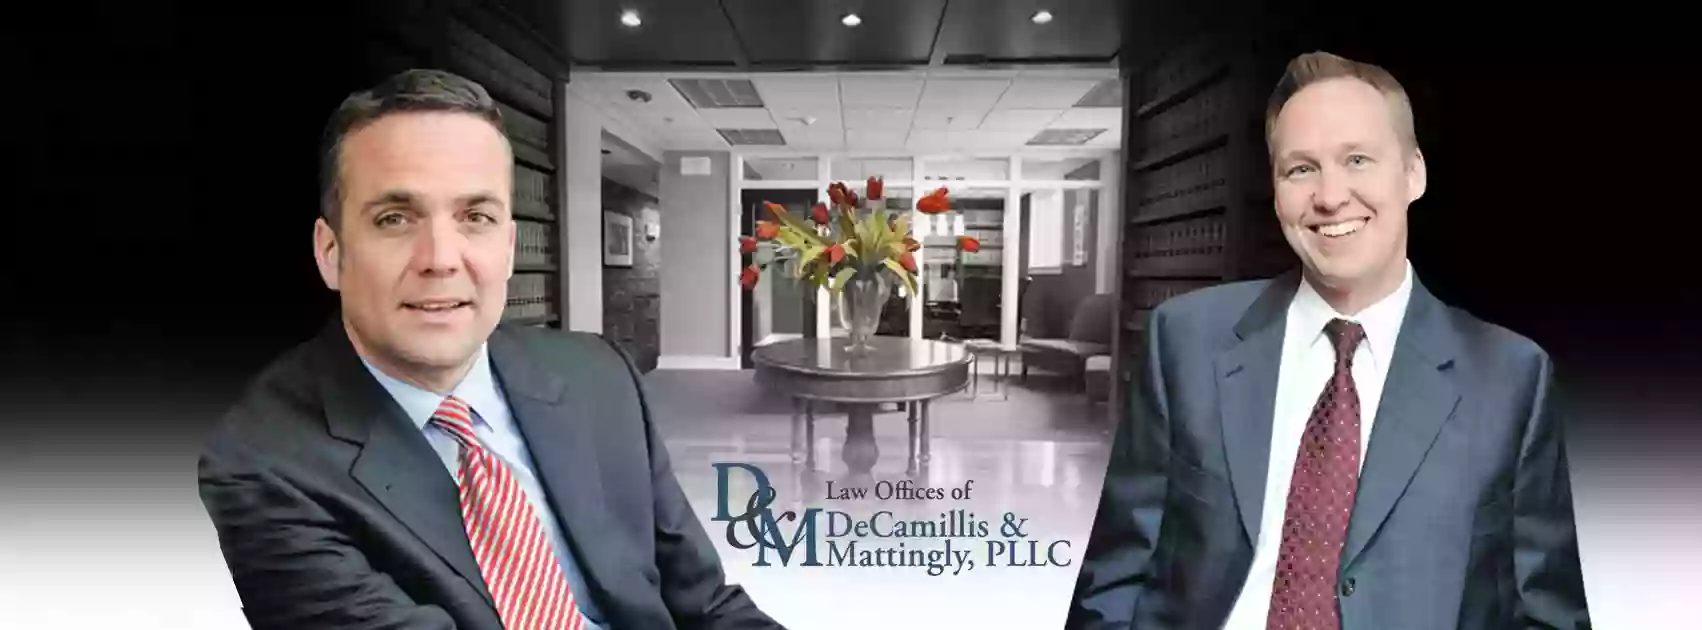 Decamillis & Mattingly, PLLC